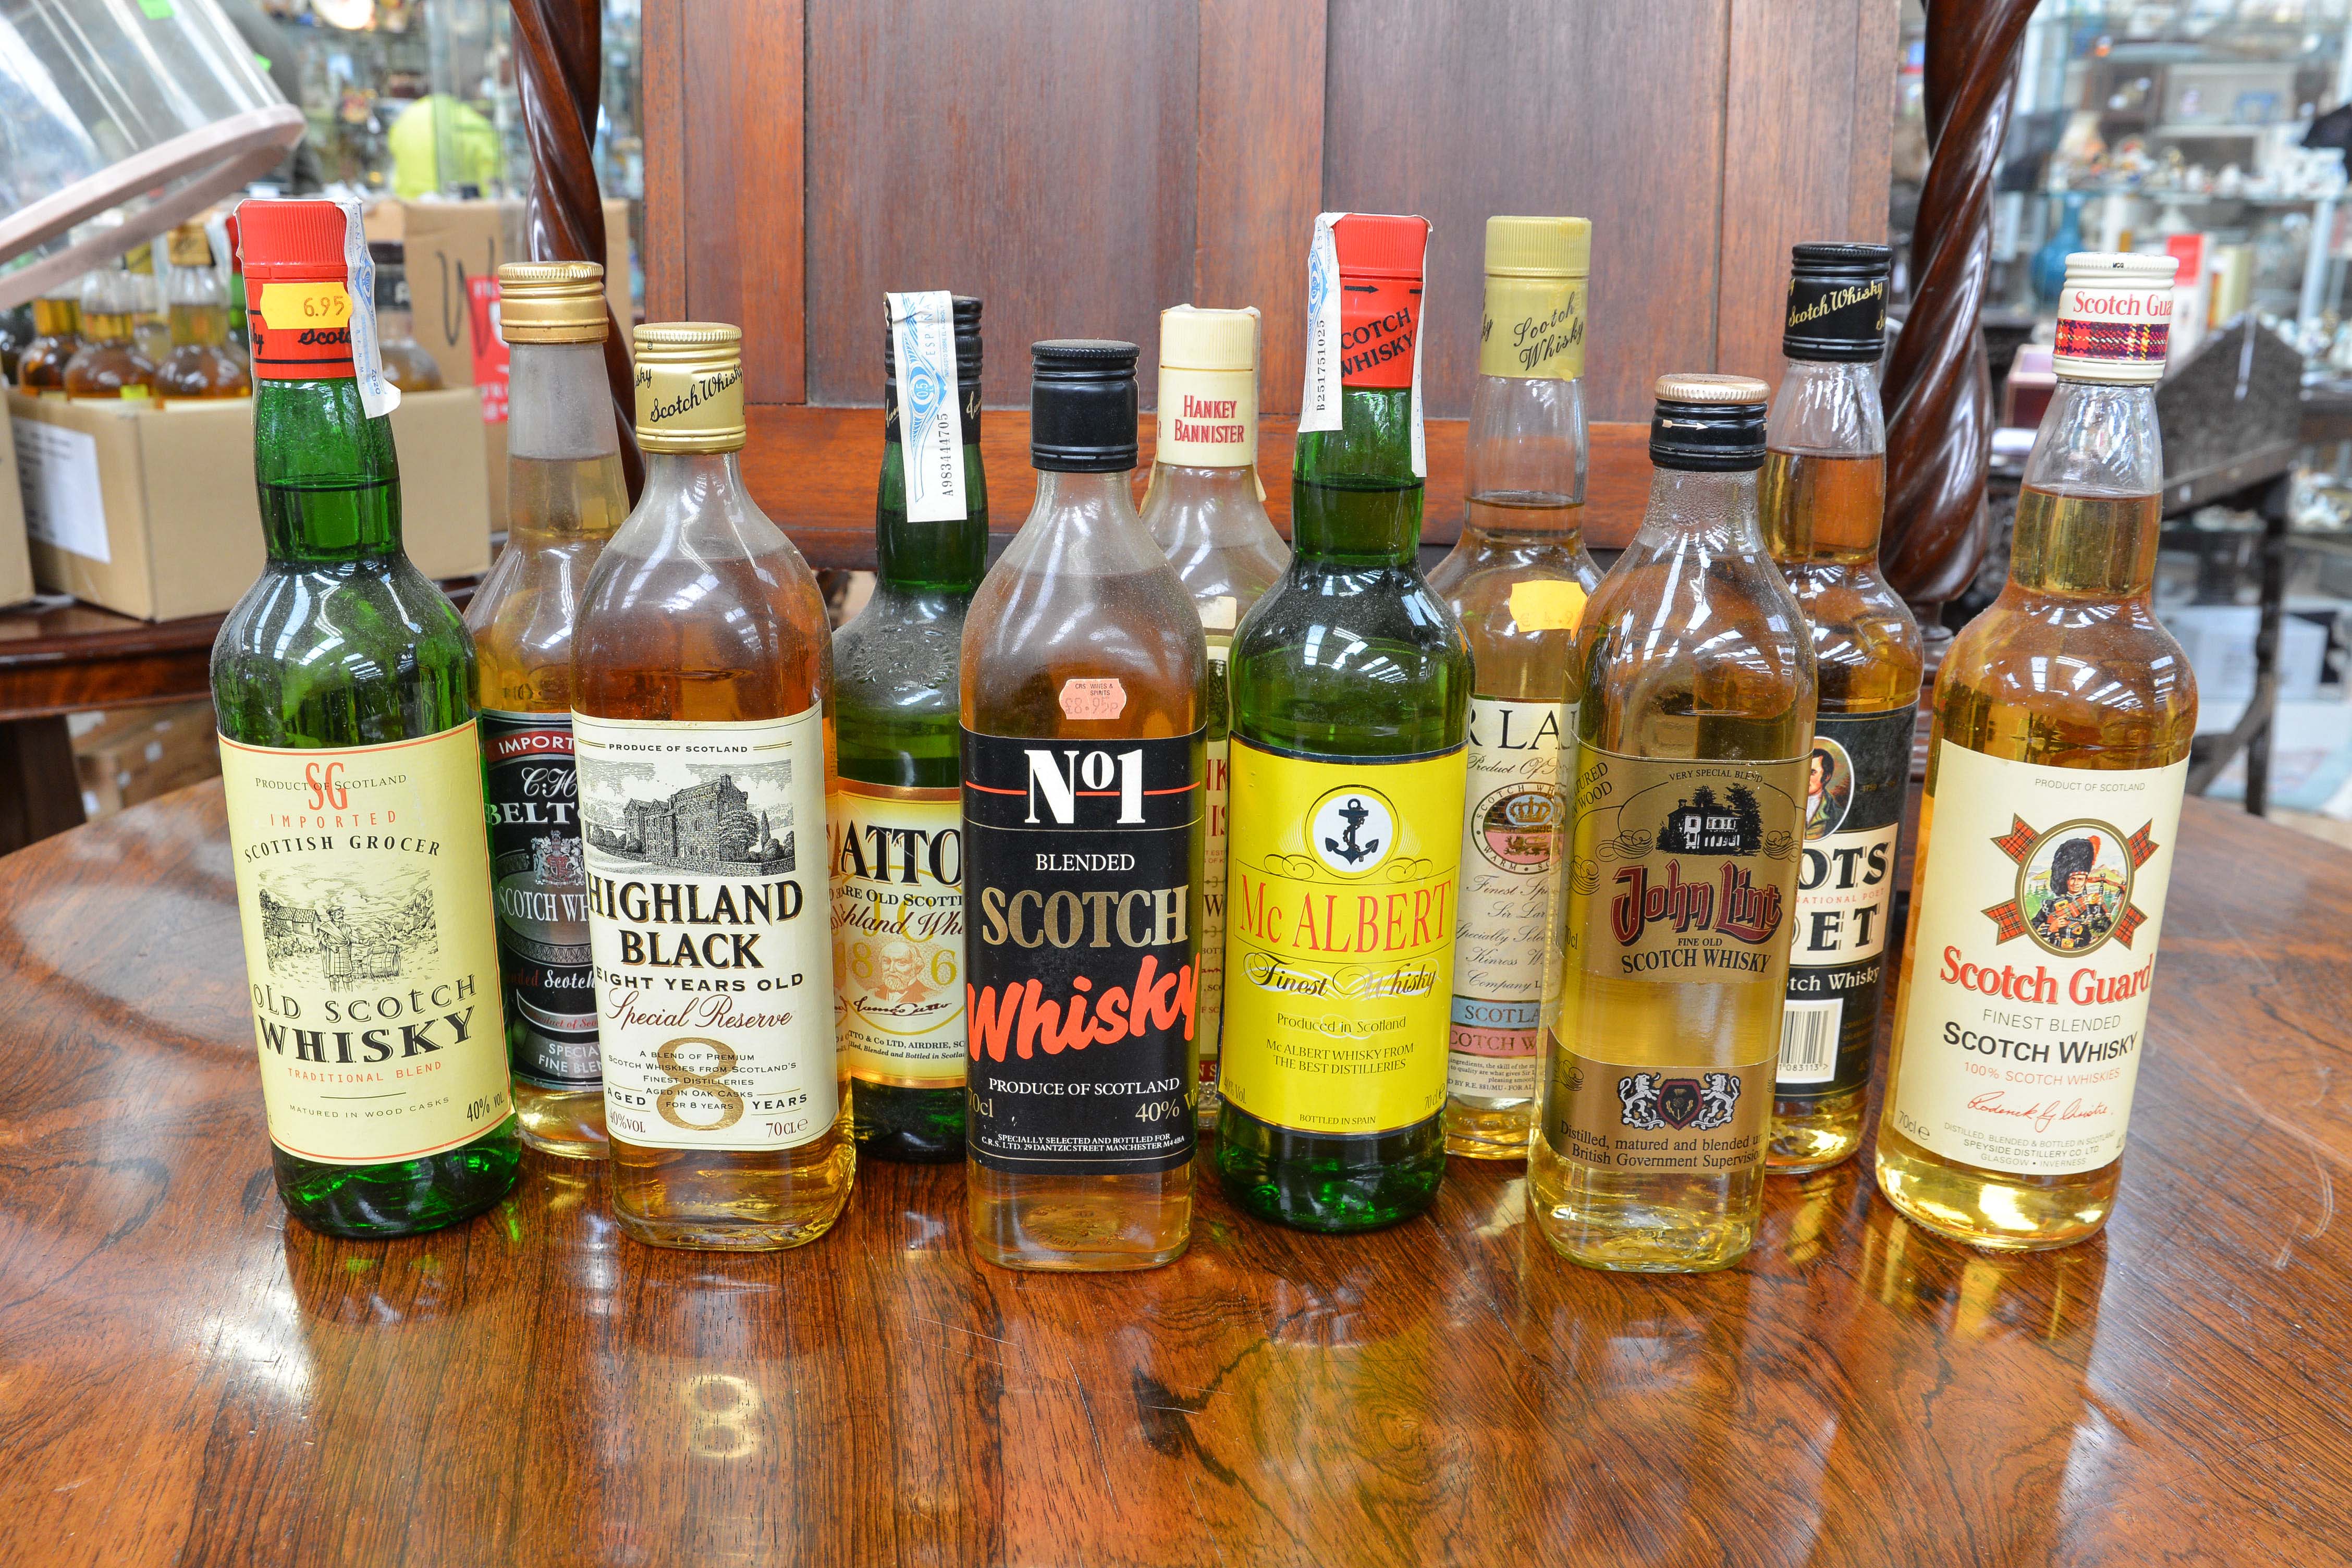 Whisky including Belton, Cattos, No.